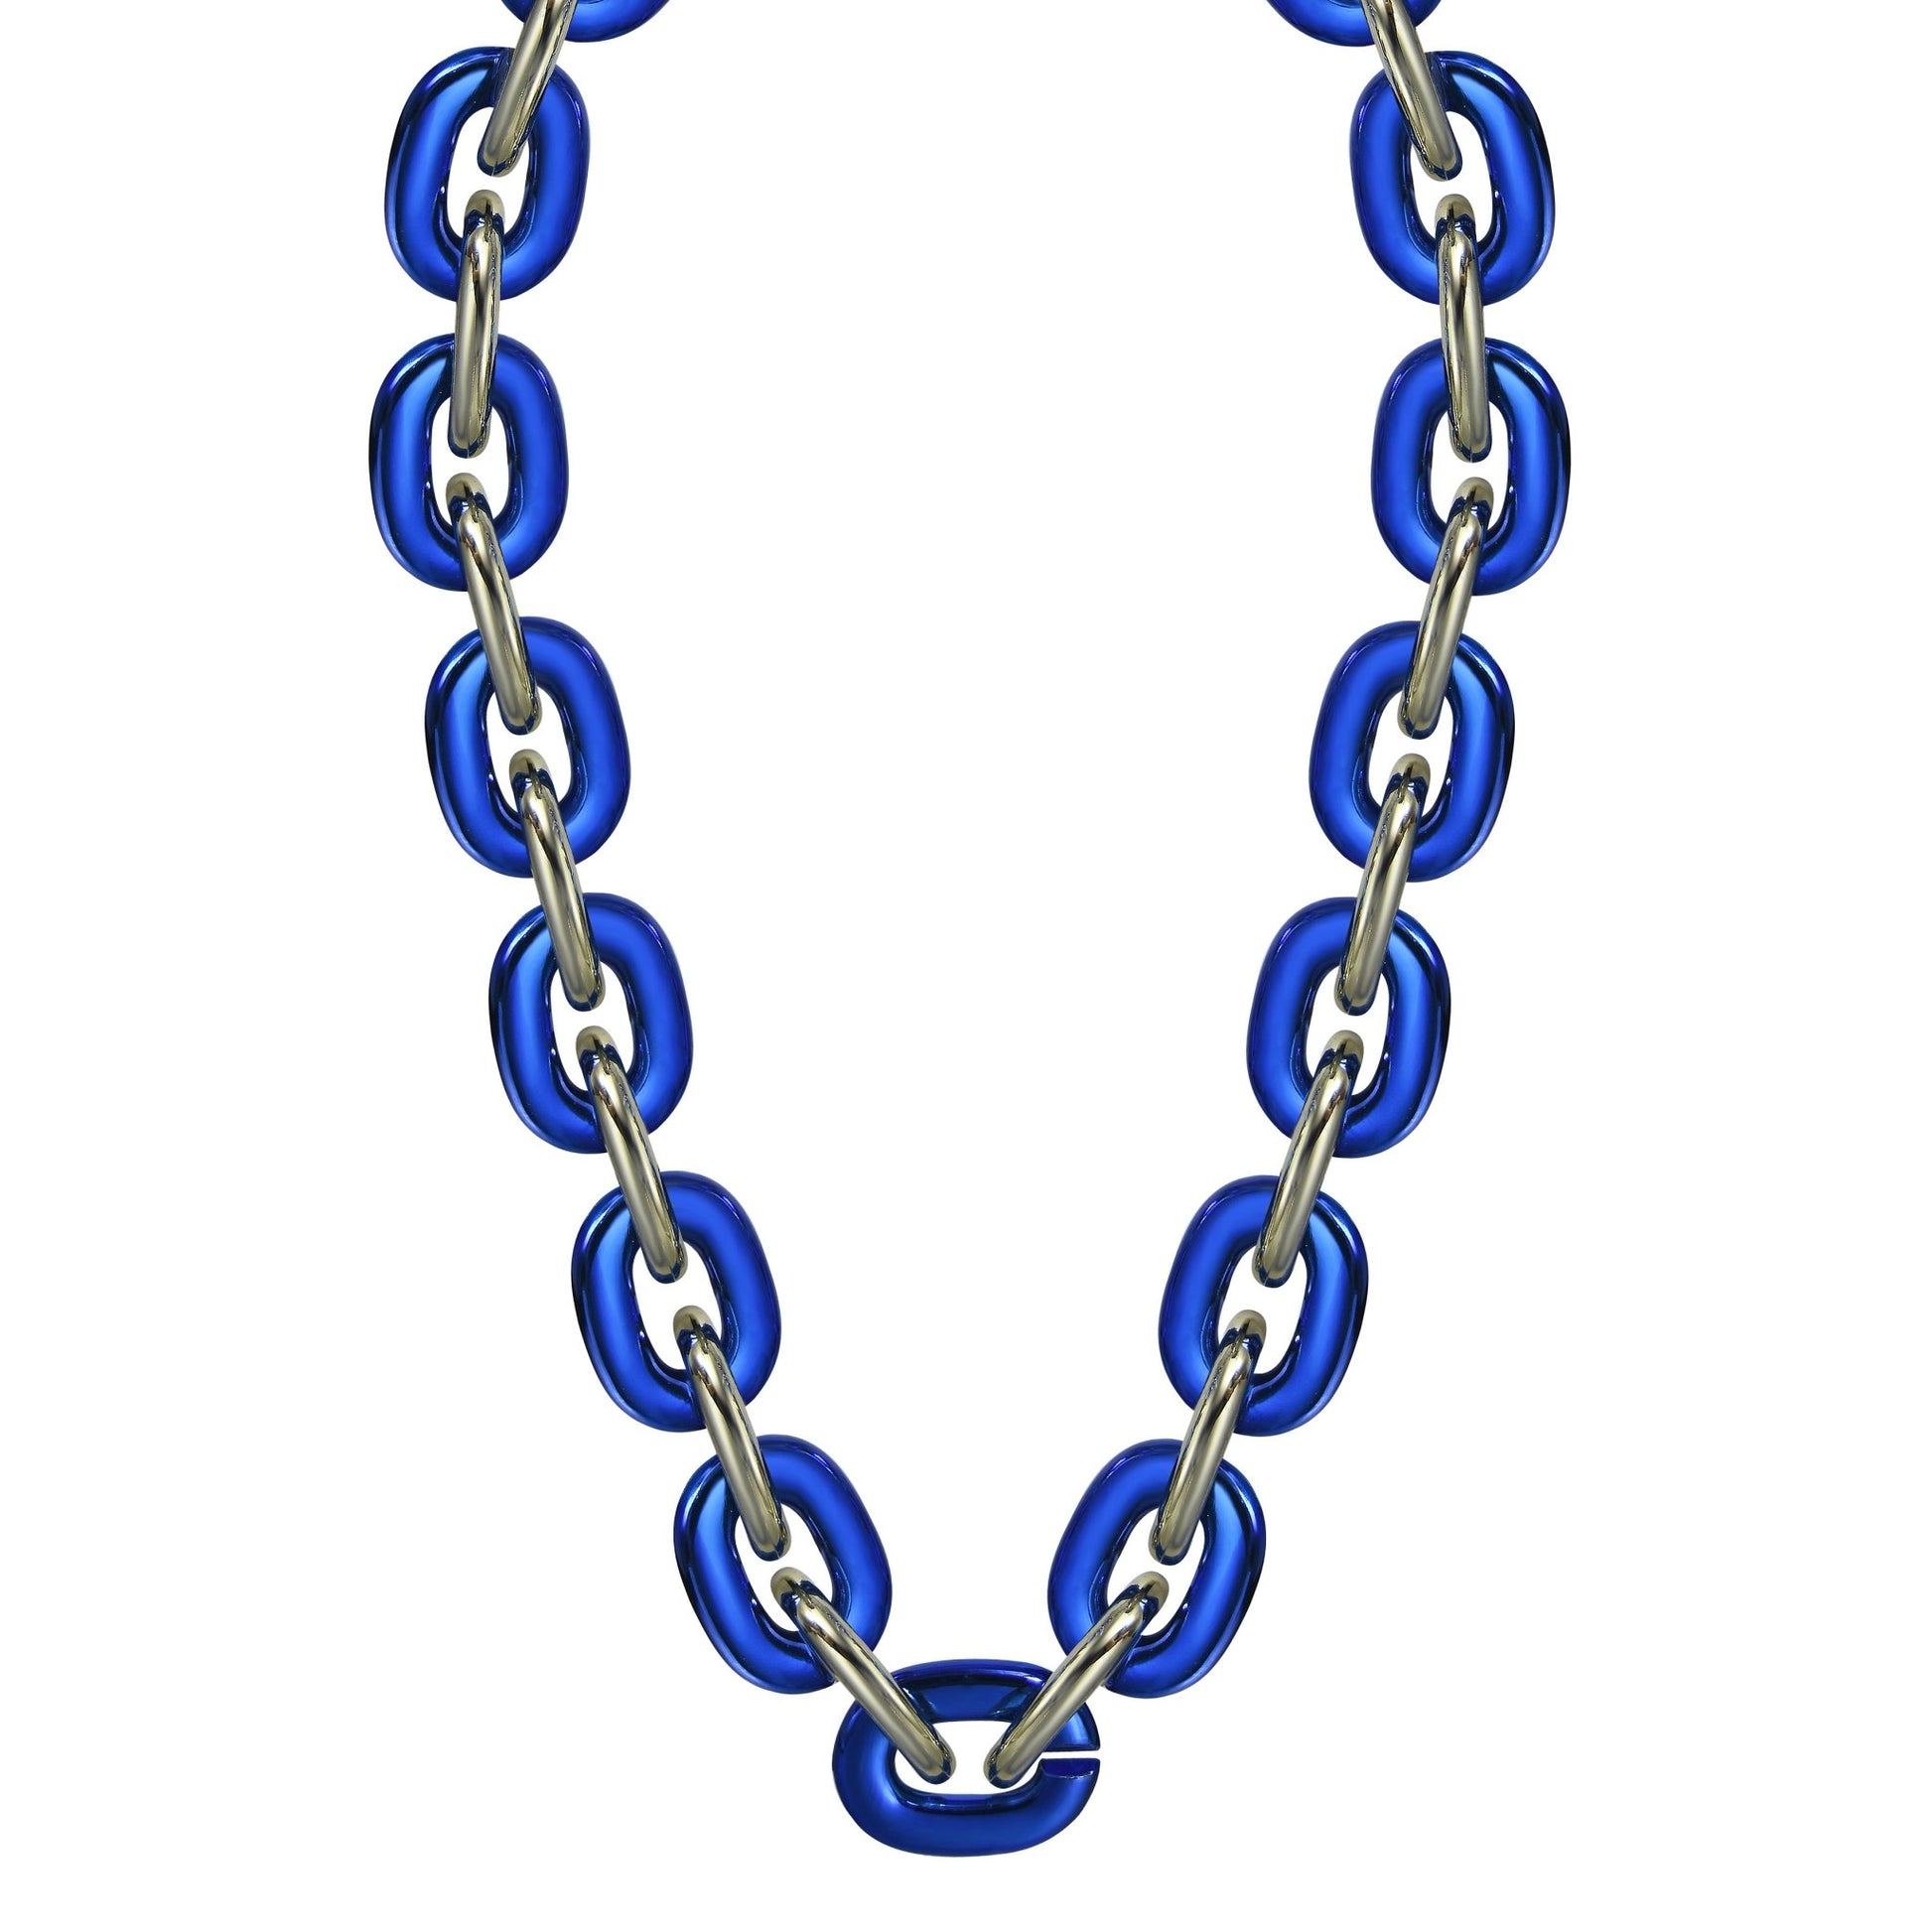 Jumbo Fan Chain Necklace - Gamedays Gear - Royal Blue / Light Gold